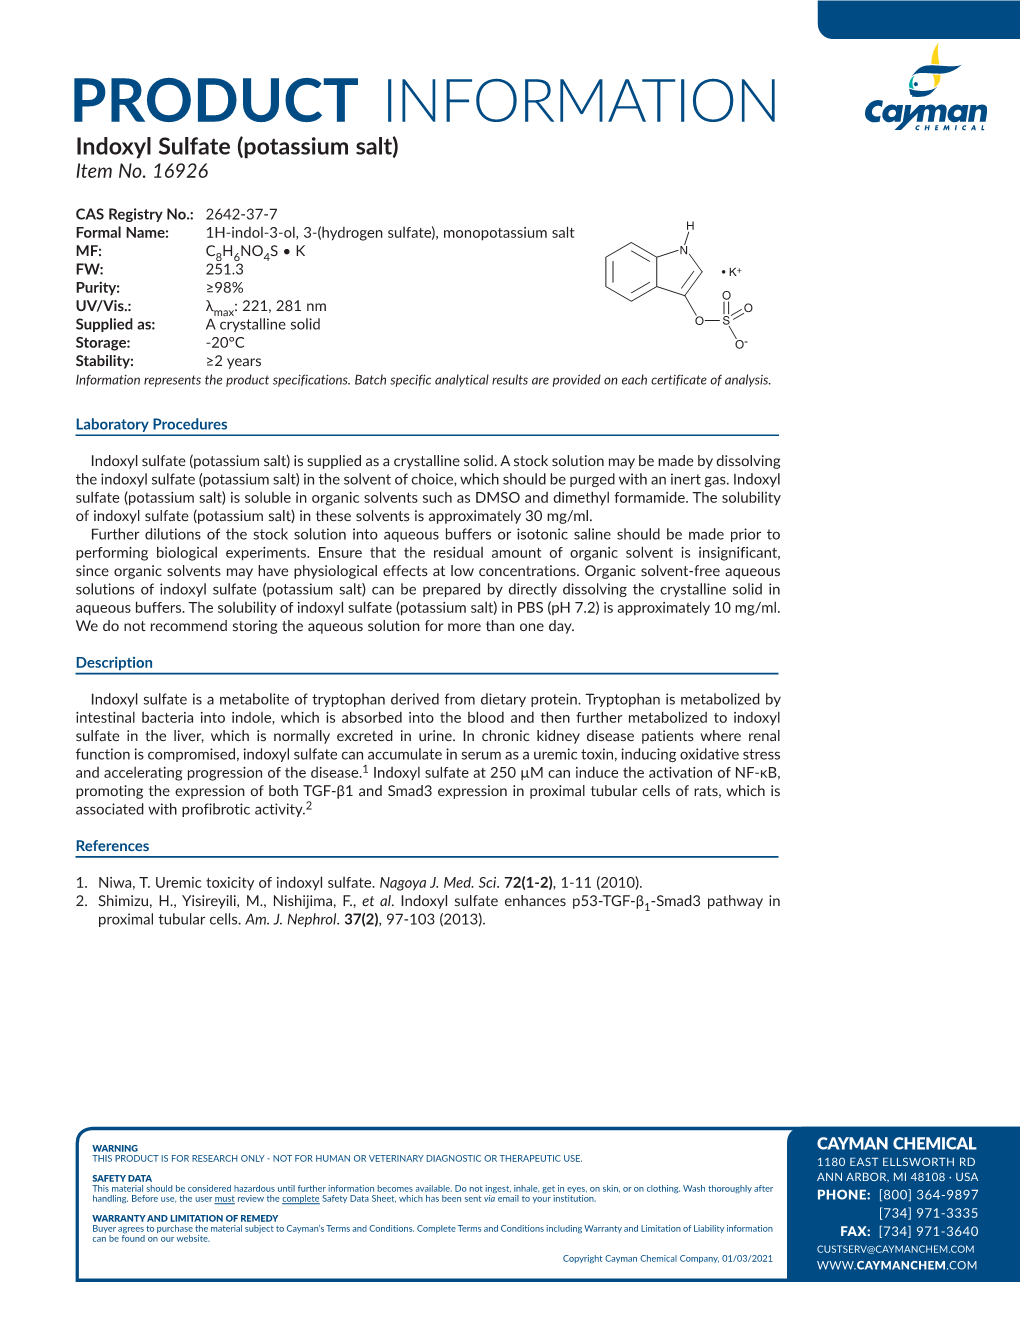 PRODUCT INFORMATION Indoxyl Sulfate (Potassium Salt) Item No